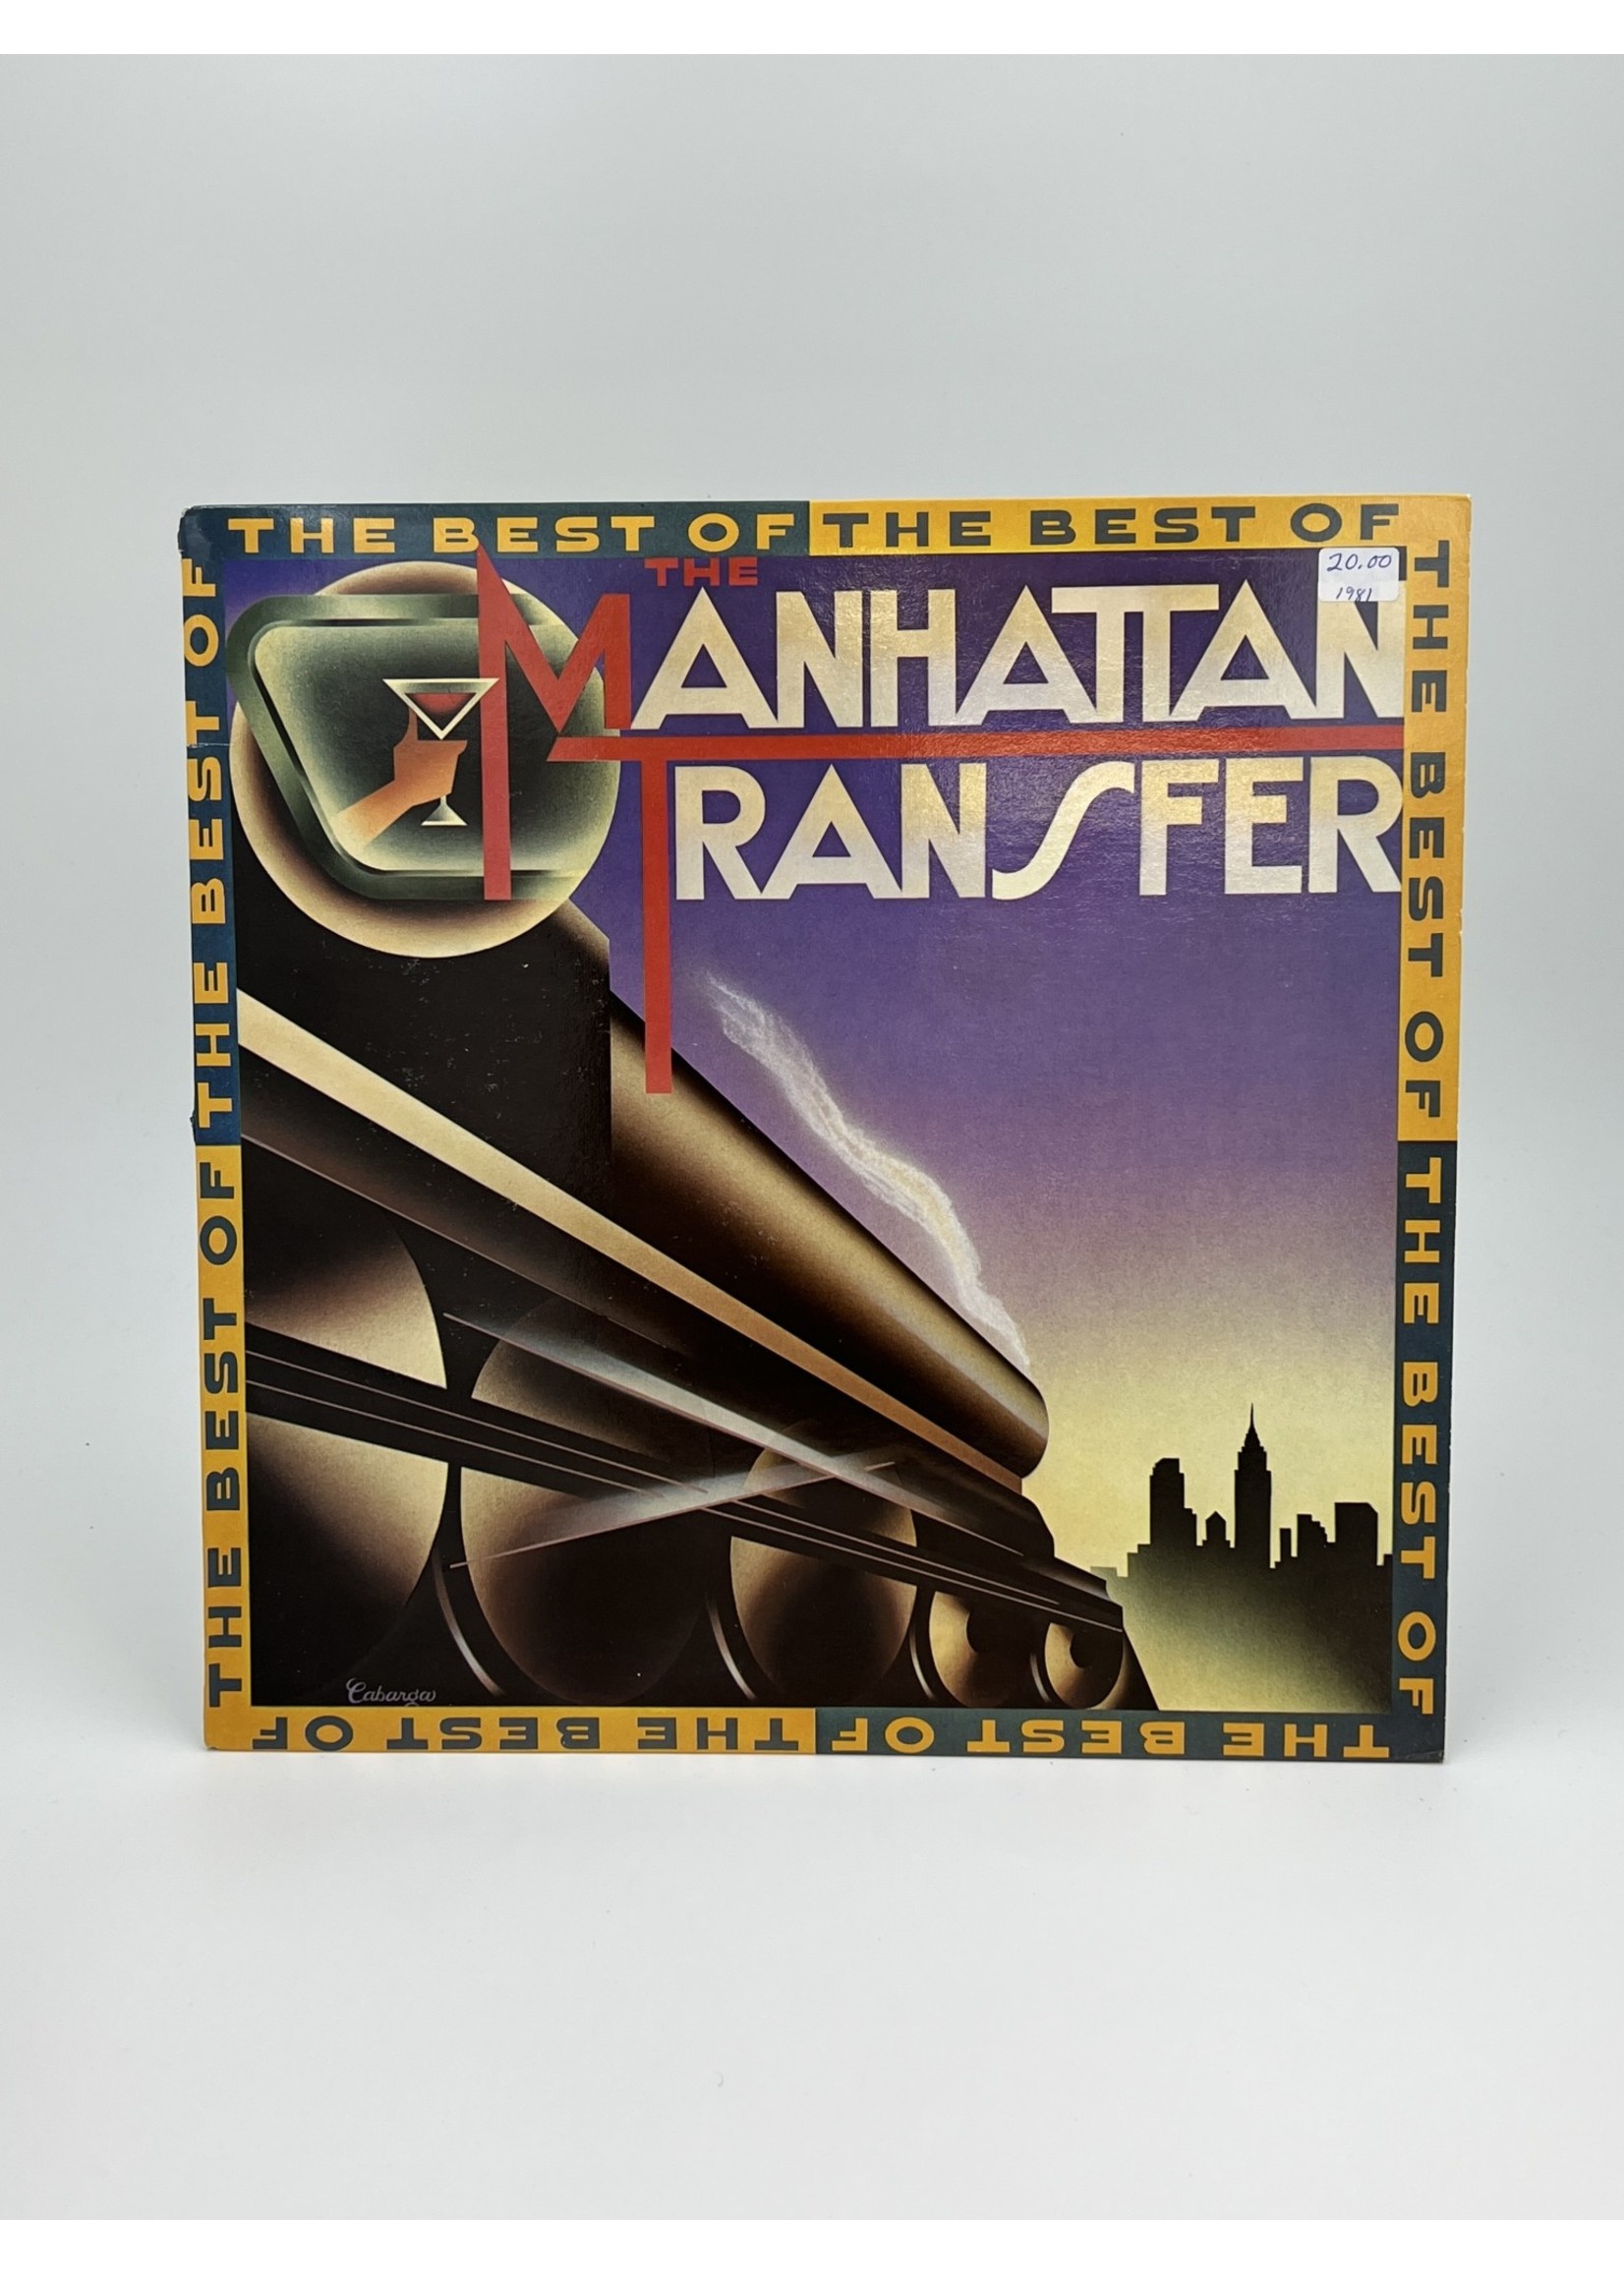 LP The Best of The Manhattan Transfer LP Record